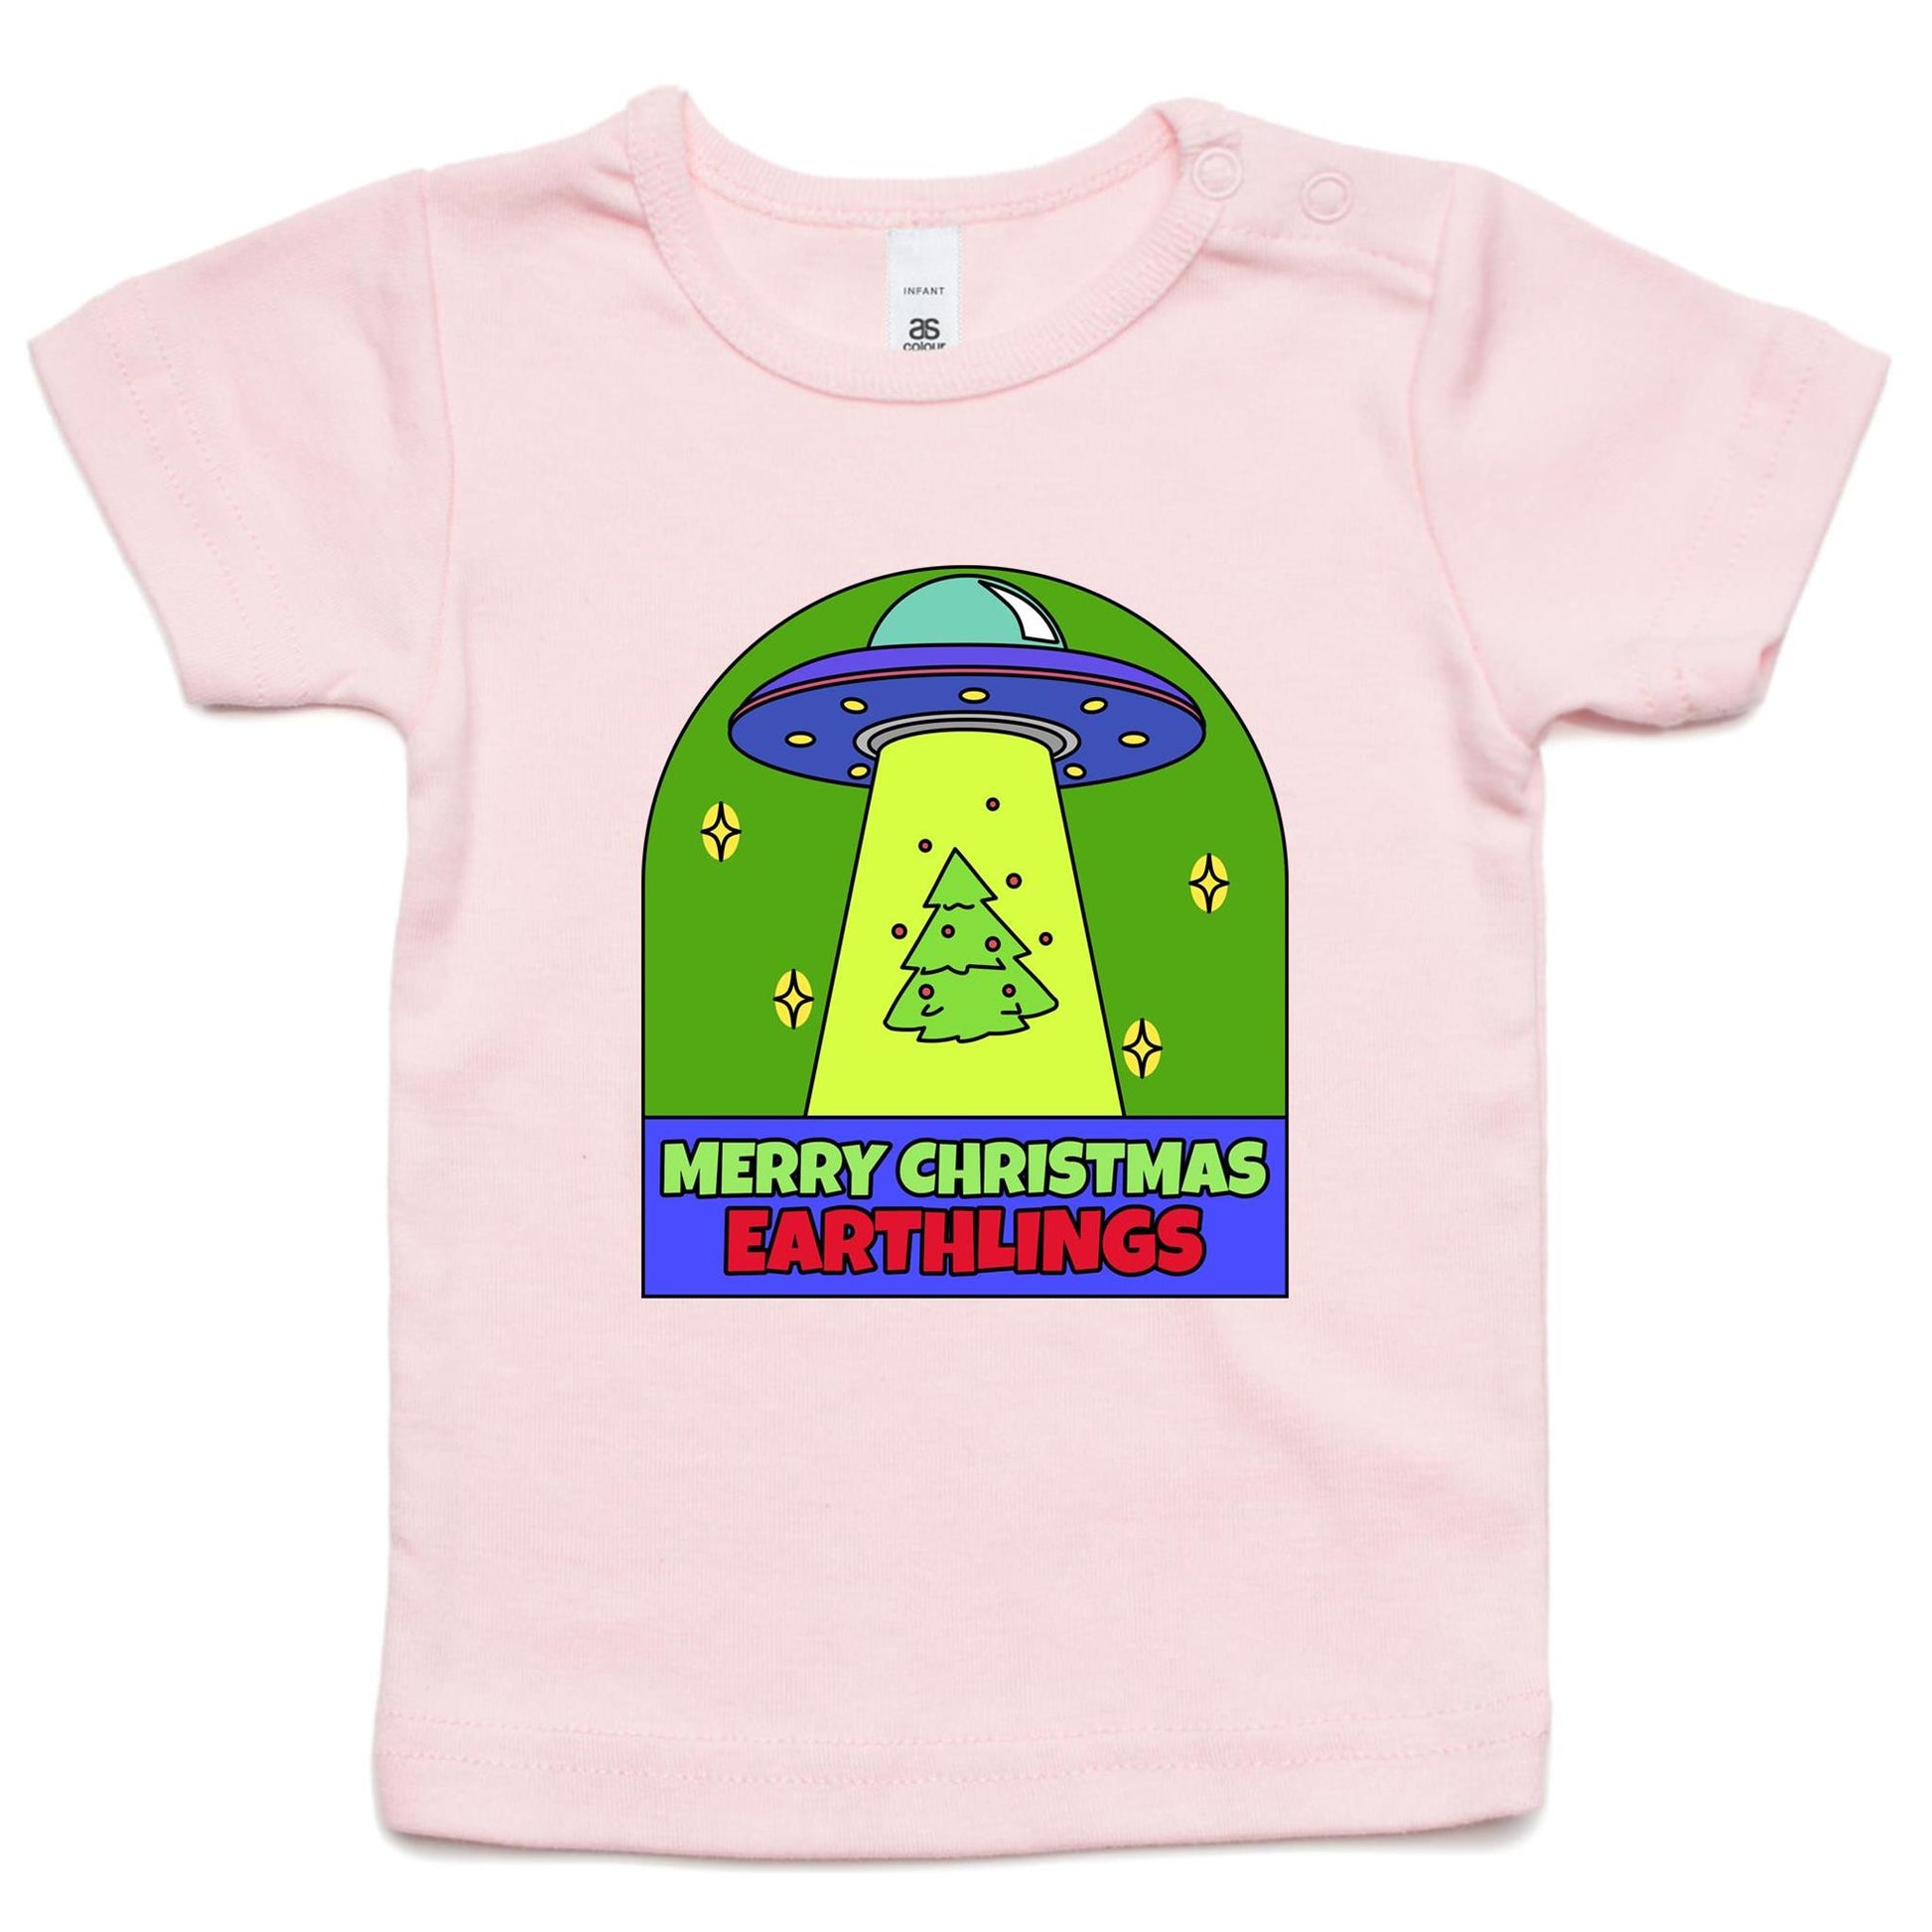 Merry Christmas Earthlings, UFO - Baby T-shirt Pink Christmas Baby T-shirt Merry Christmas